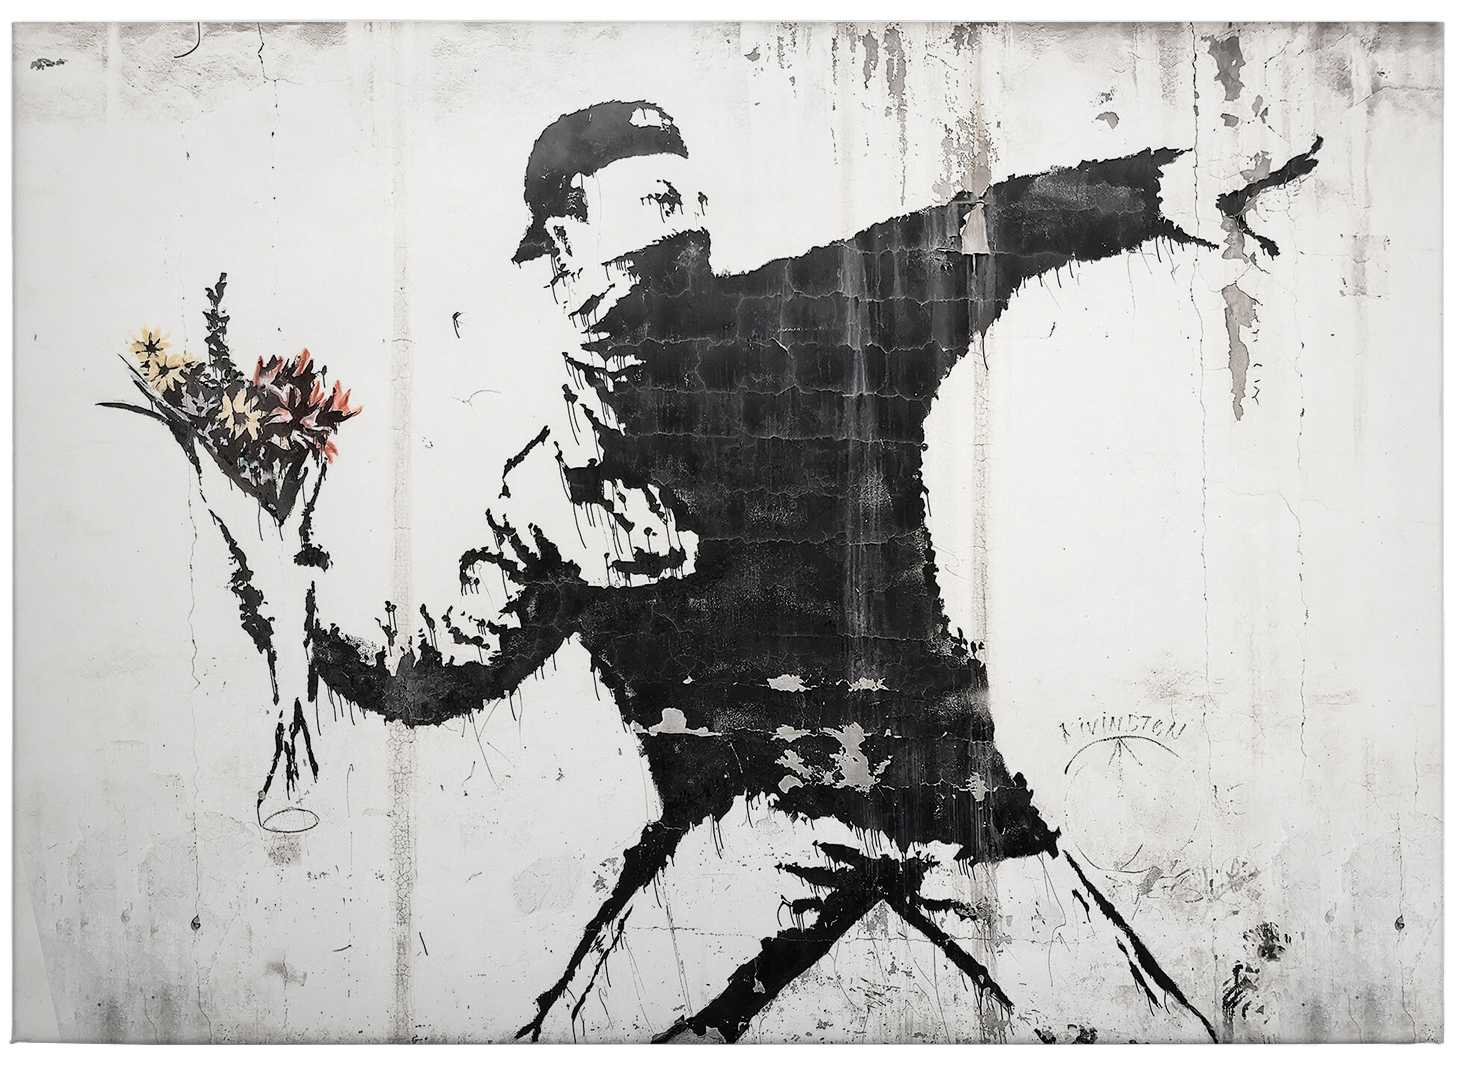             Banksy Leinwandbild "Flower Thrower" Graffiti Stil – 0,70 m x 0,50 m
        